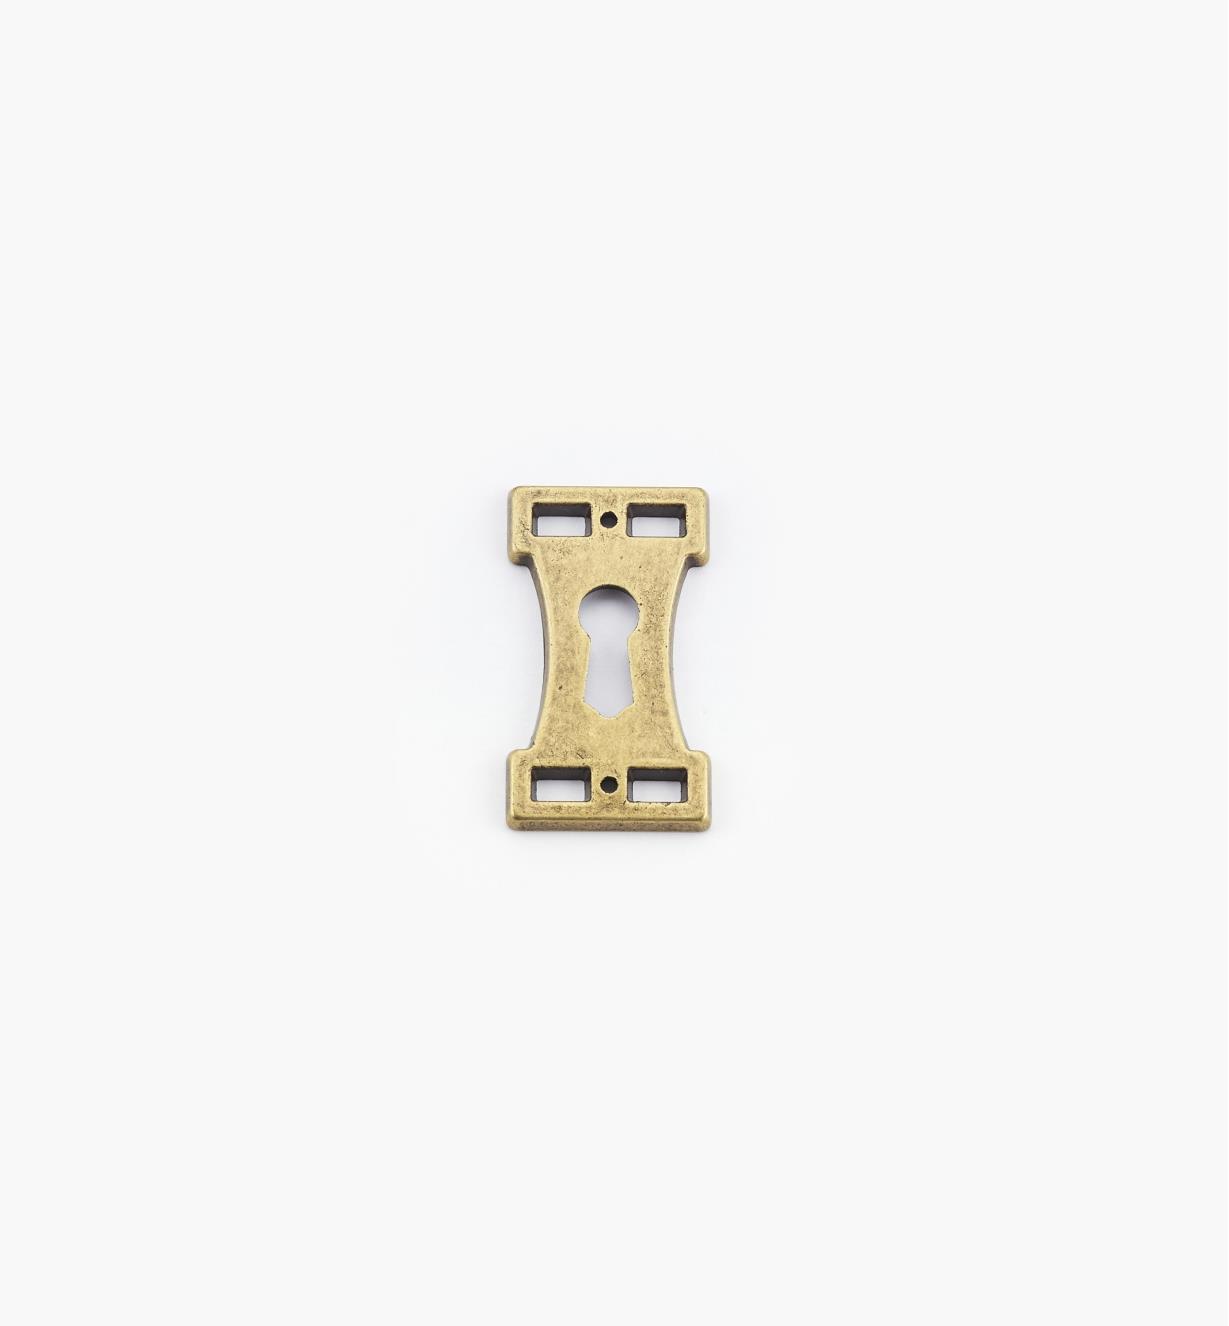 01A2286 - Antique Brass Keyhole Escutcheon, Arts and Crafts